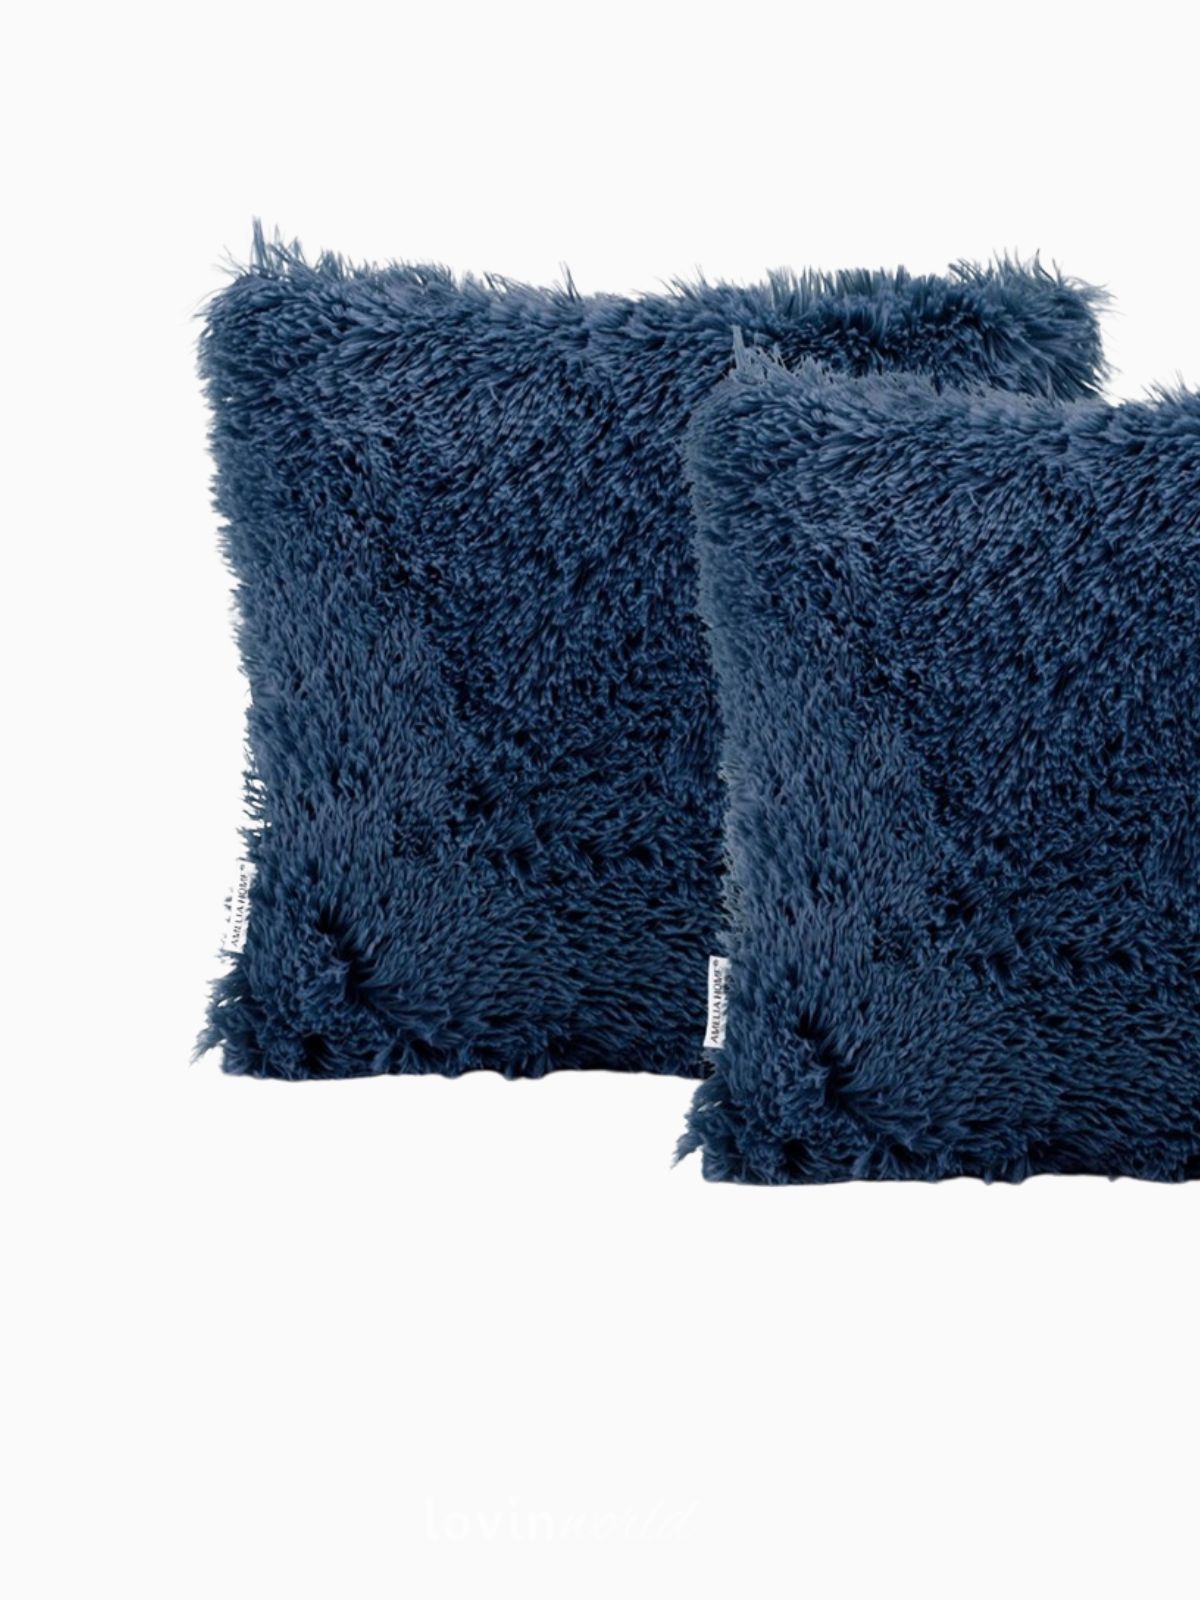 2 Federe per cuscino Karvag in colore blu scuro 45x45 cm.-5